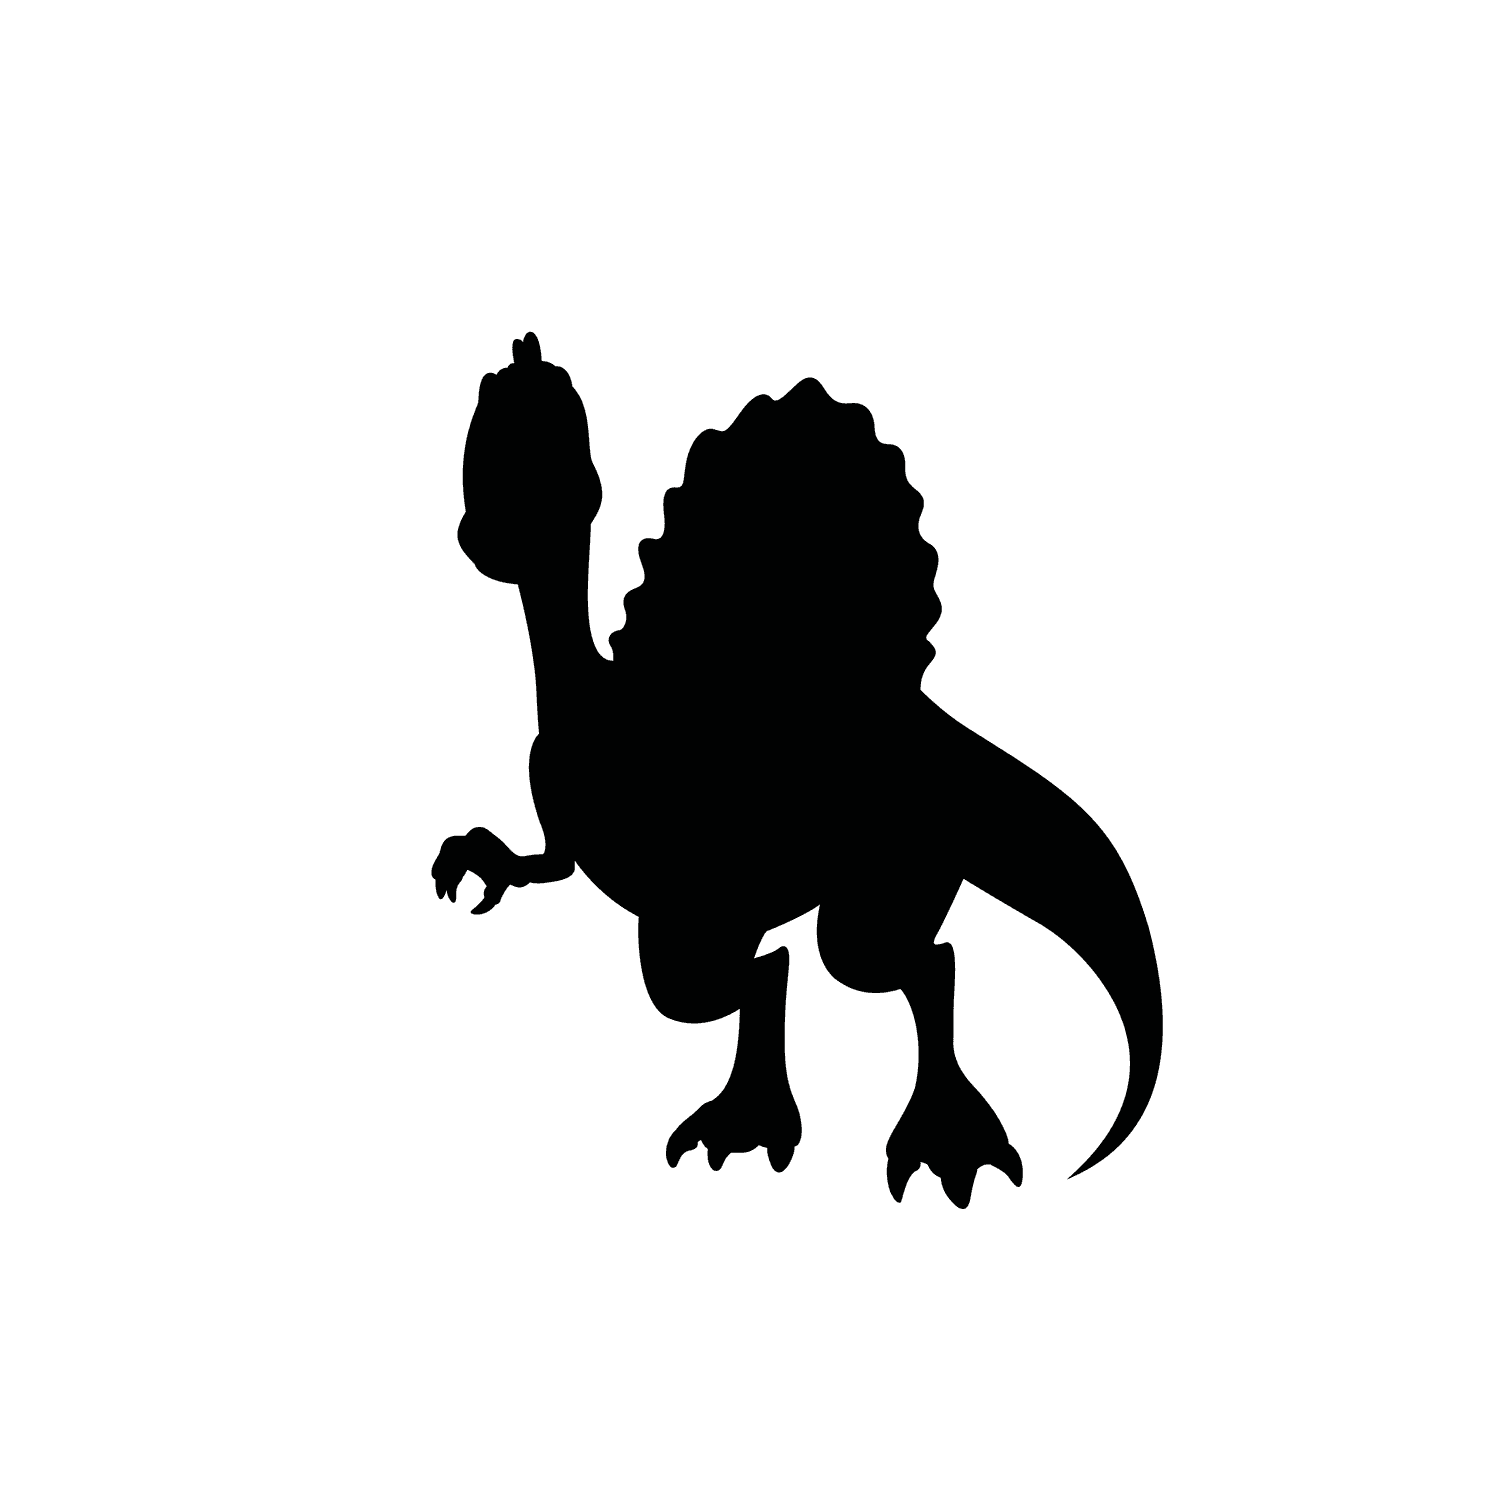 cartoon dinosaur character silhouette